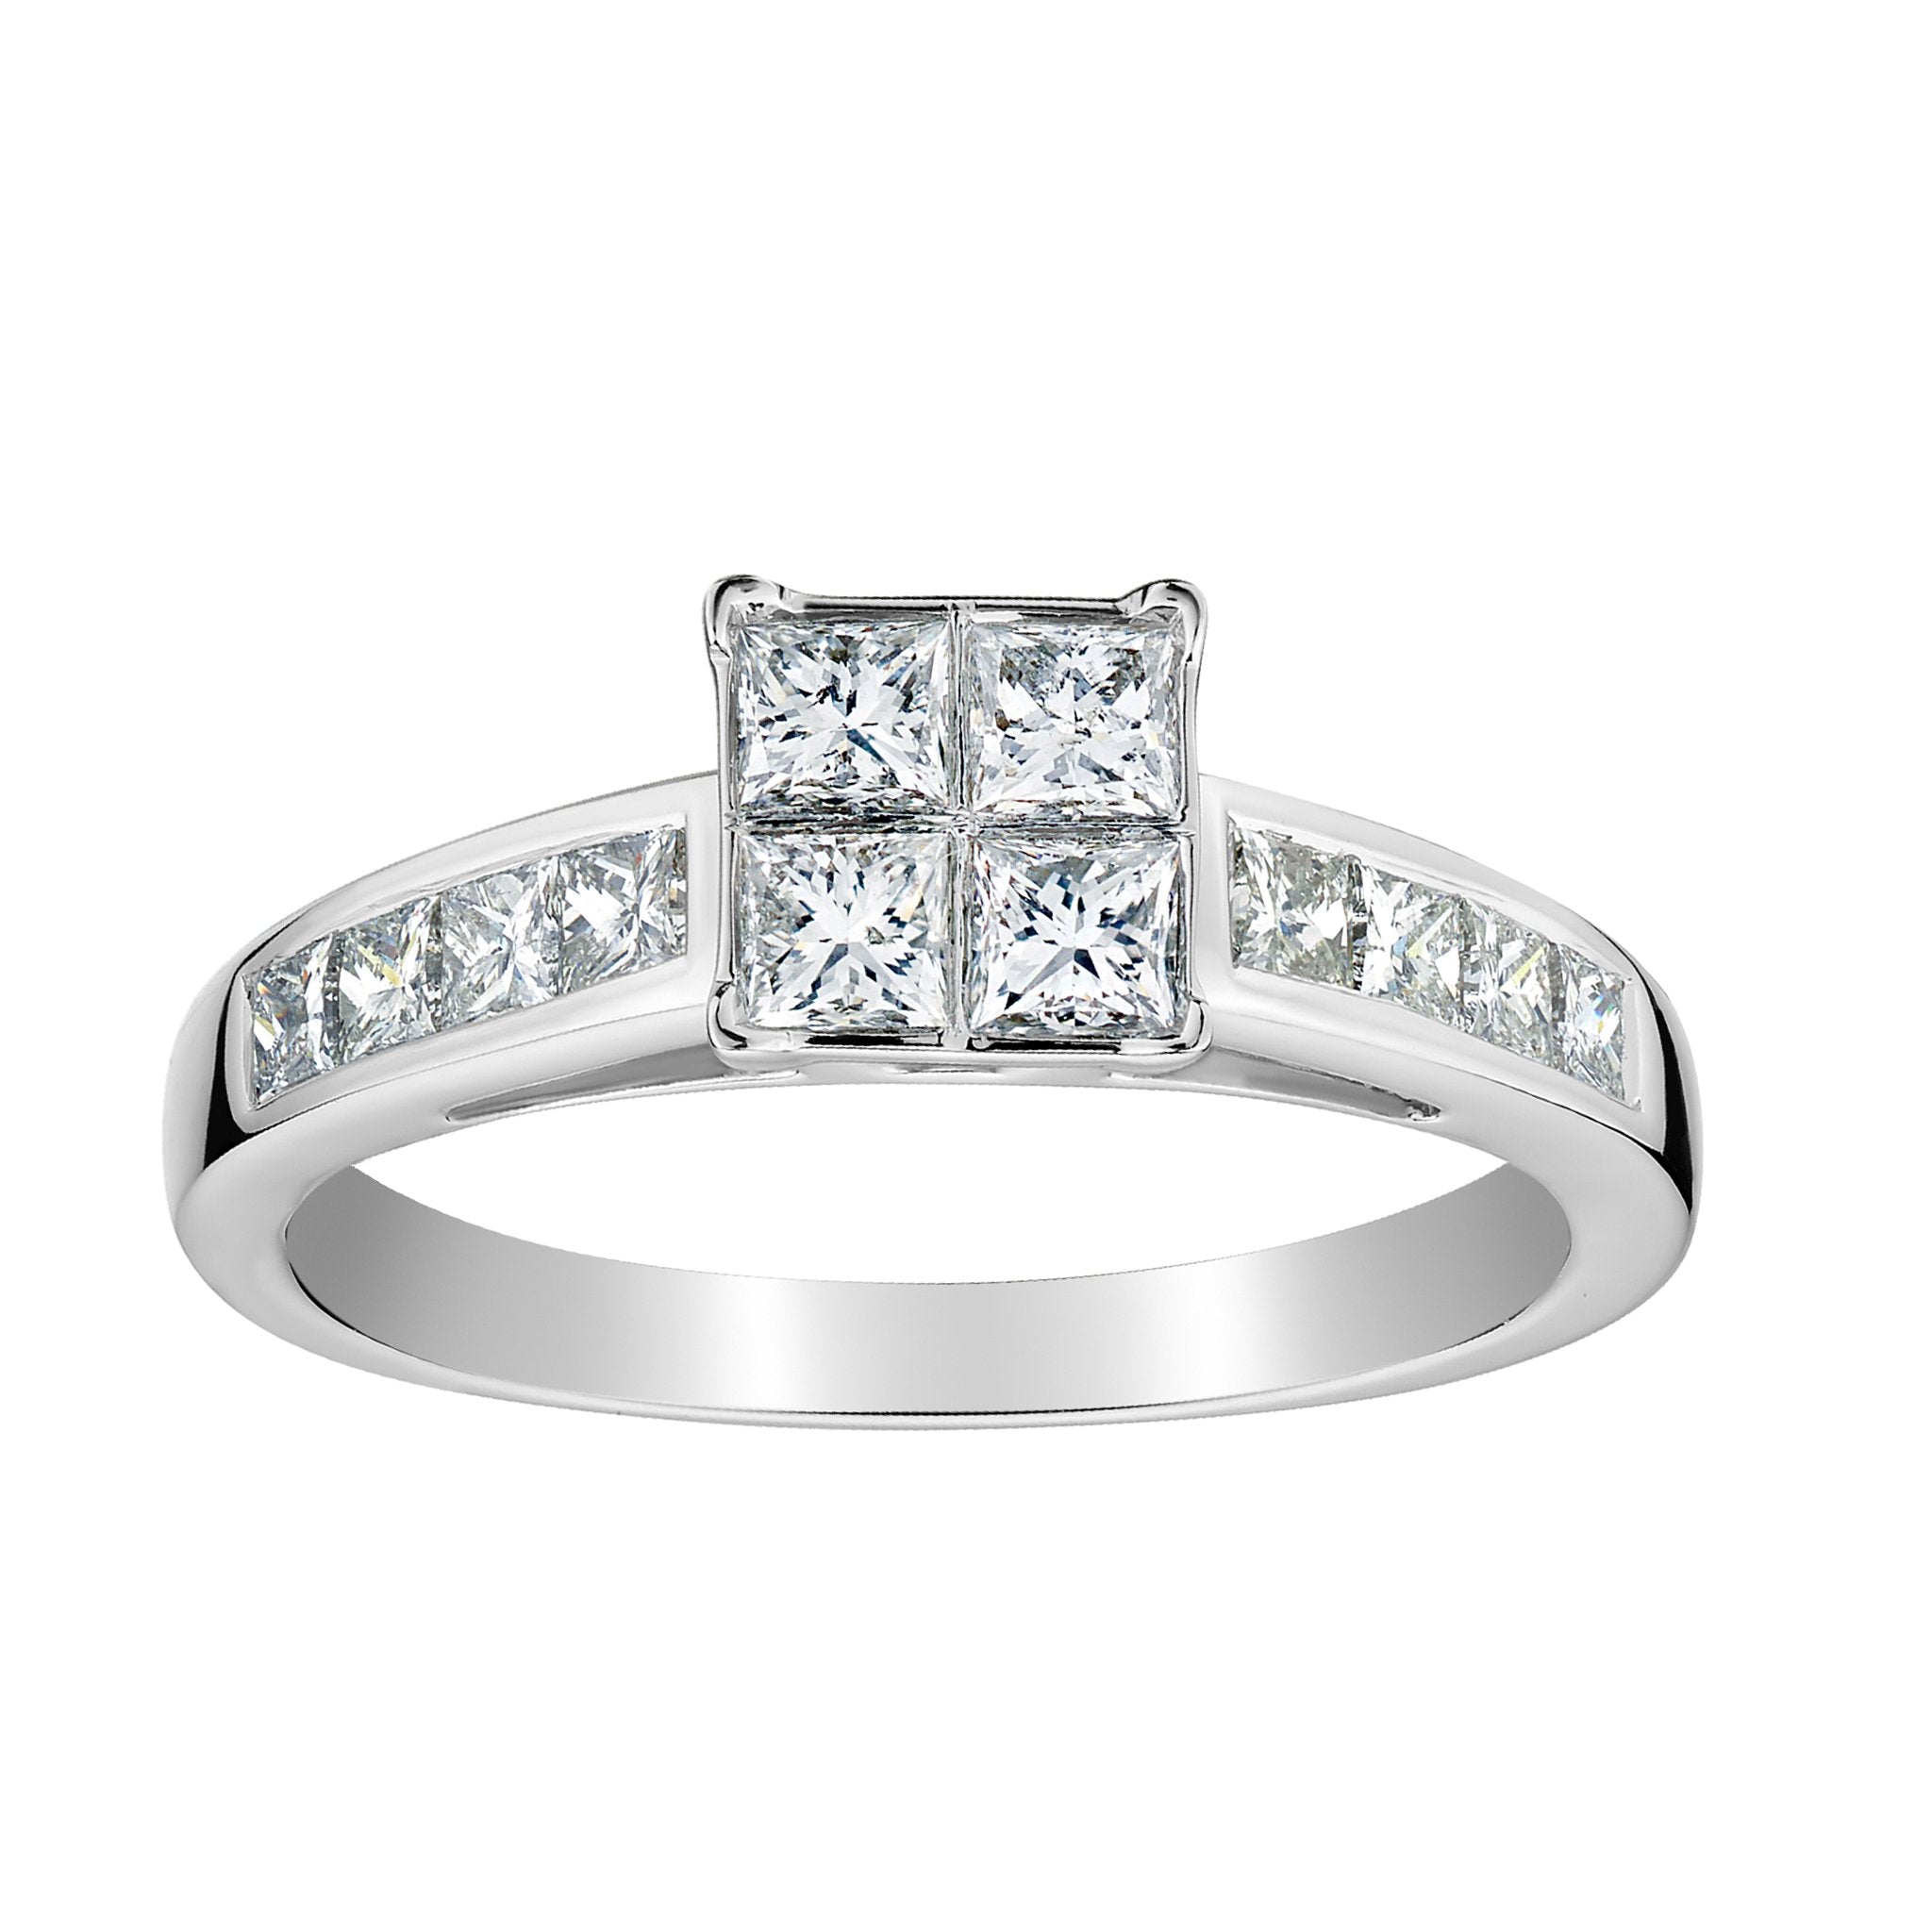 1.00 Carat Princess Cut Design Diamond Ring, 10kt White Gold - Griffin Jewellery Designs